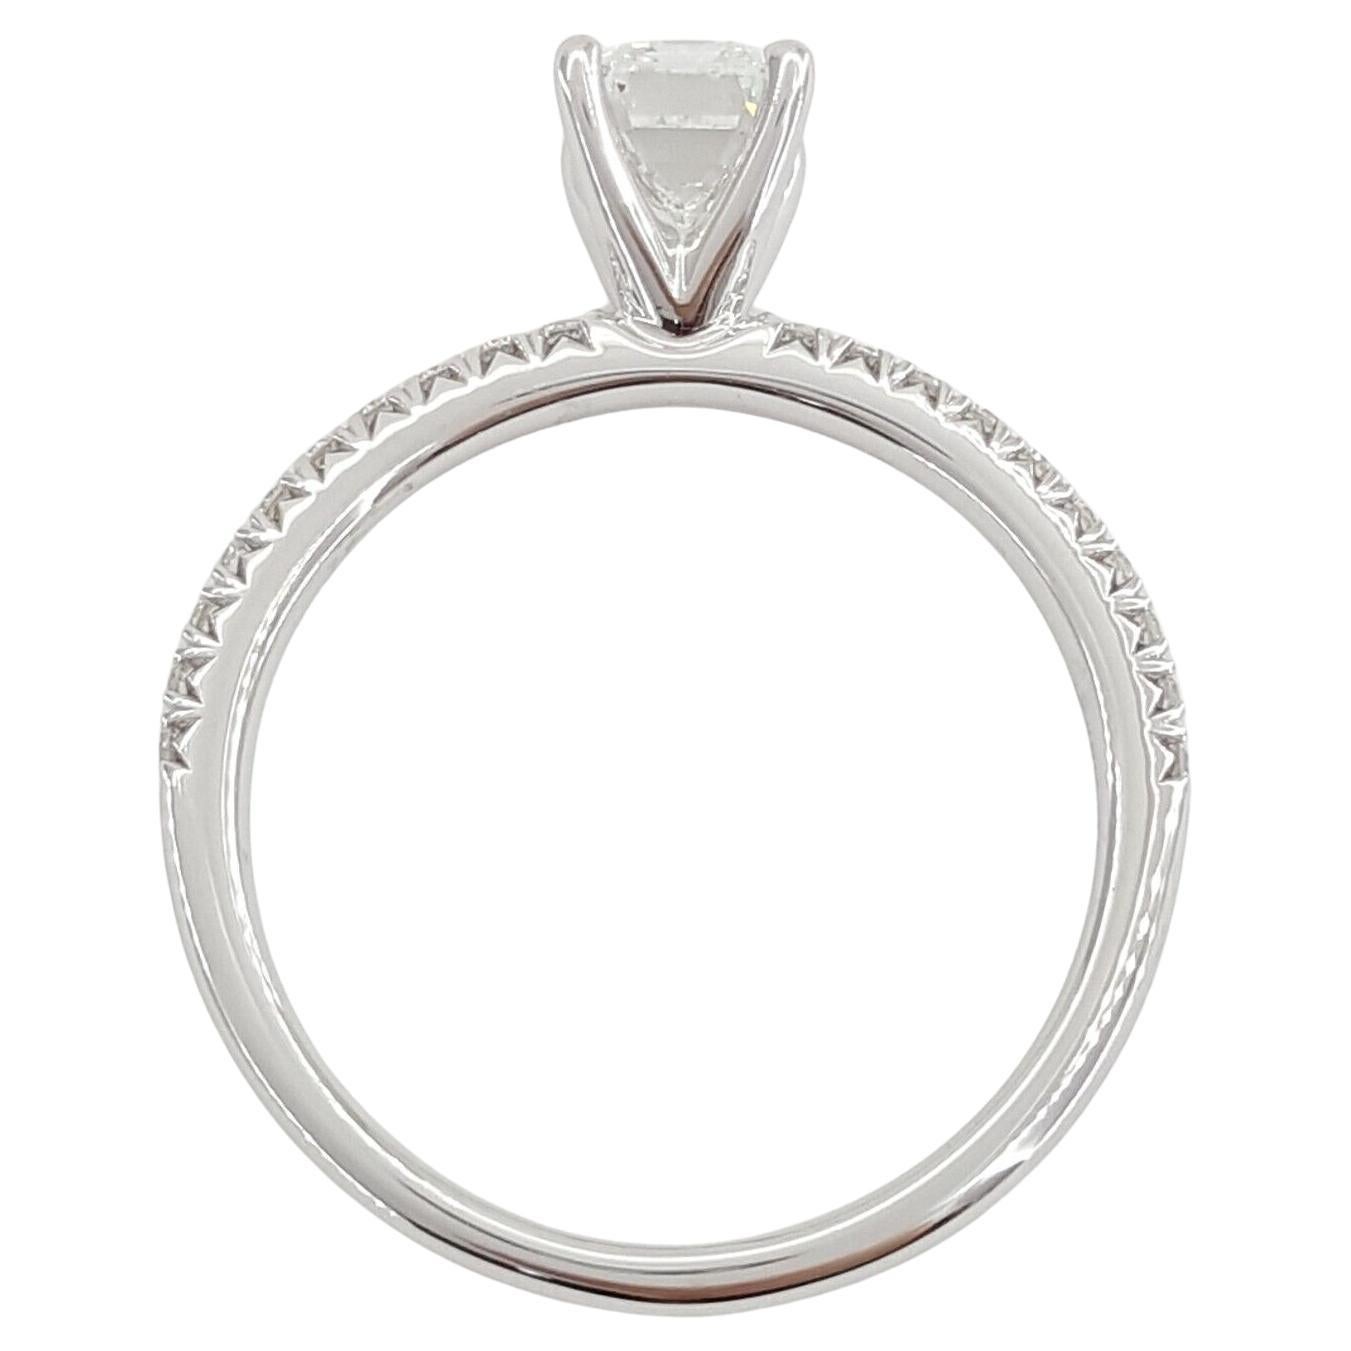 1 carat emerald cut diamond ring price